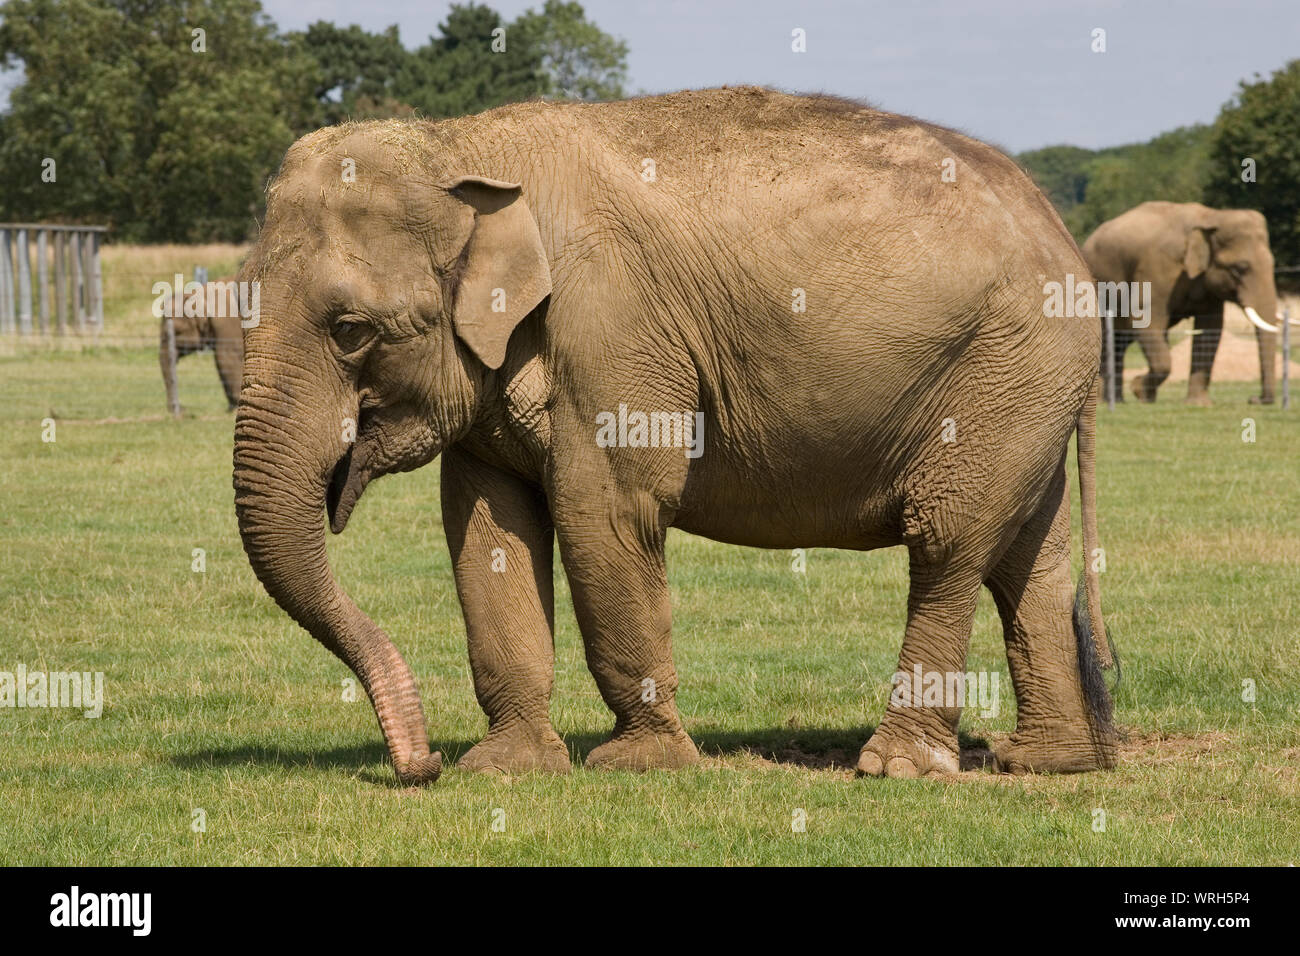 Tuskless female Asian elephant in foreground with tusked male Asian elephants in distance at Whipsnade zoo Stock Photo